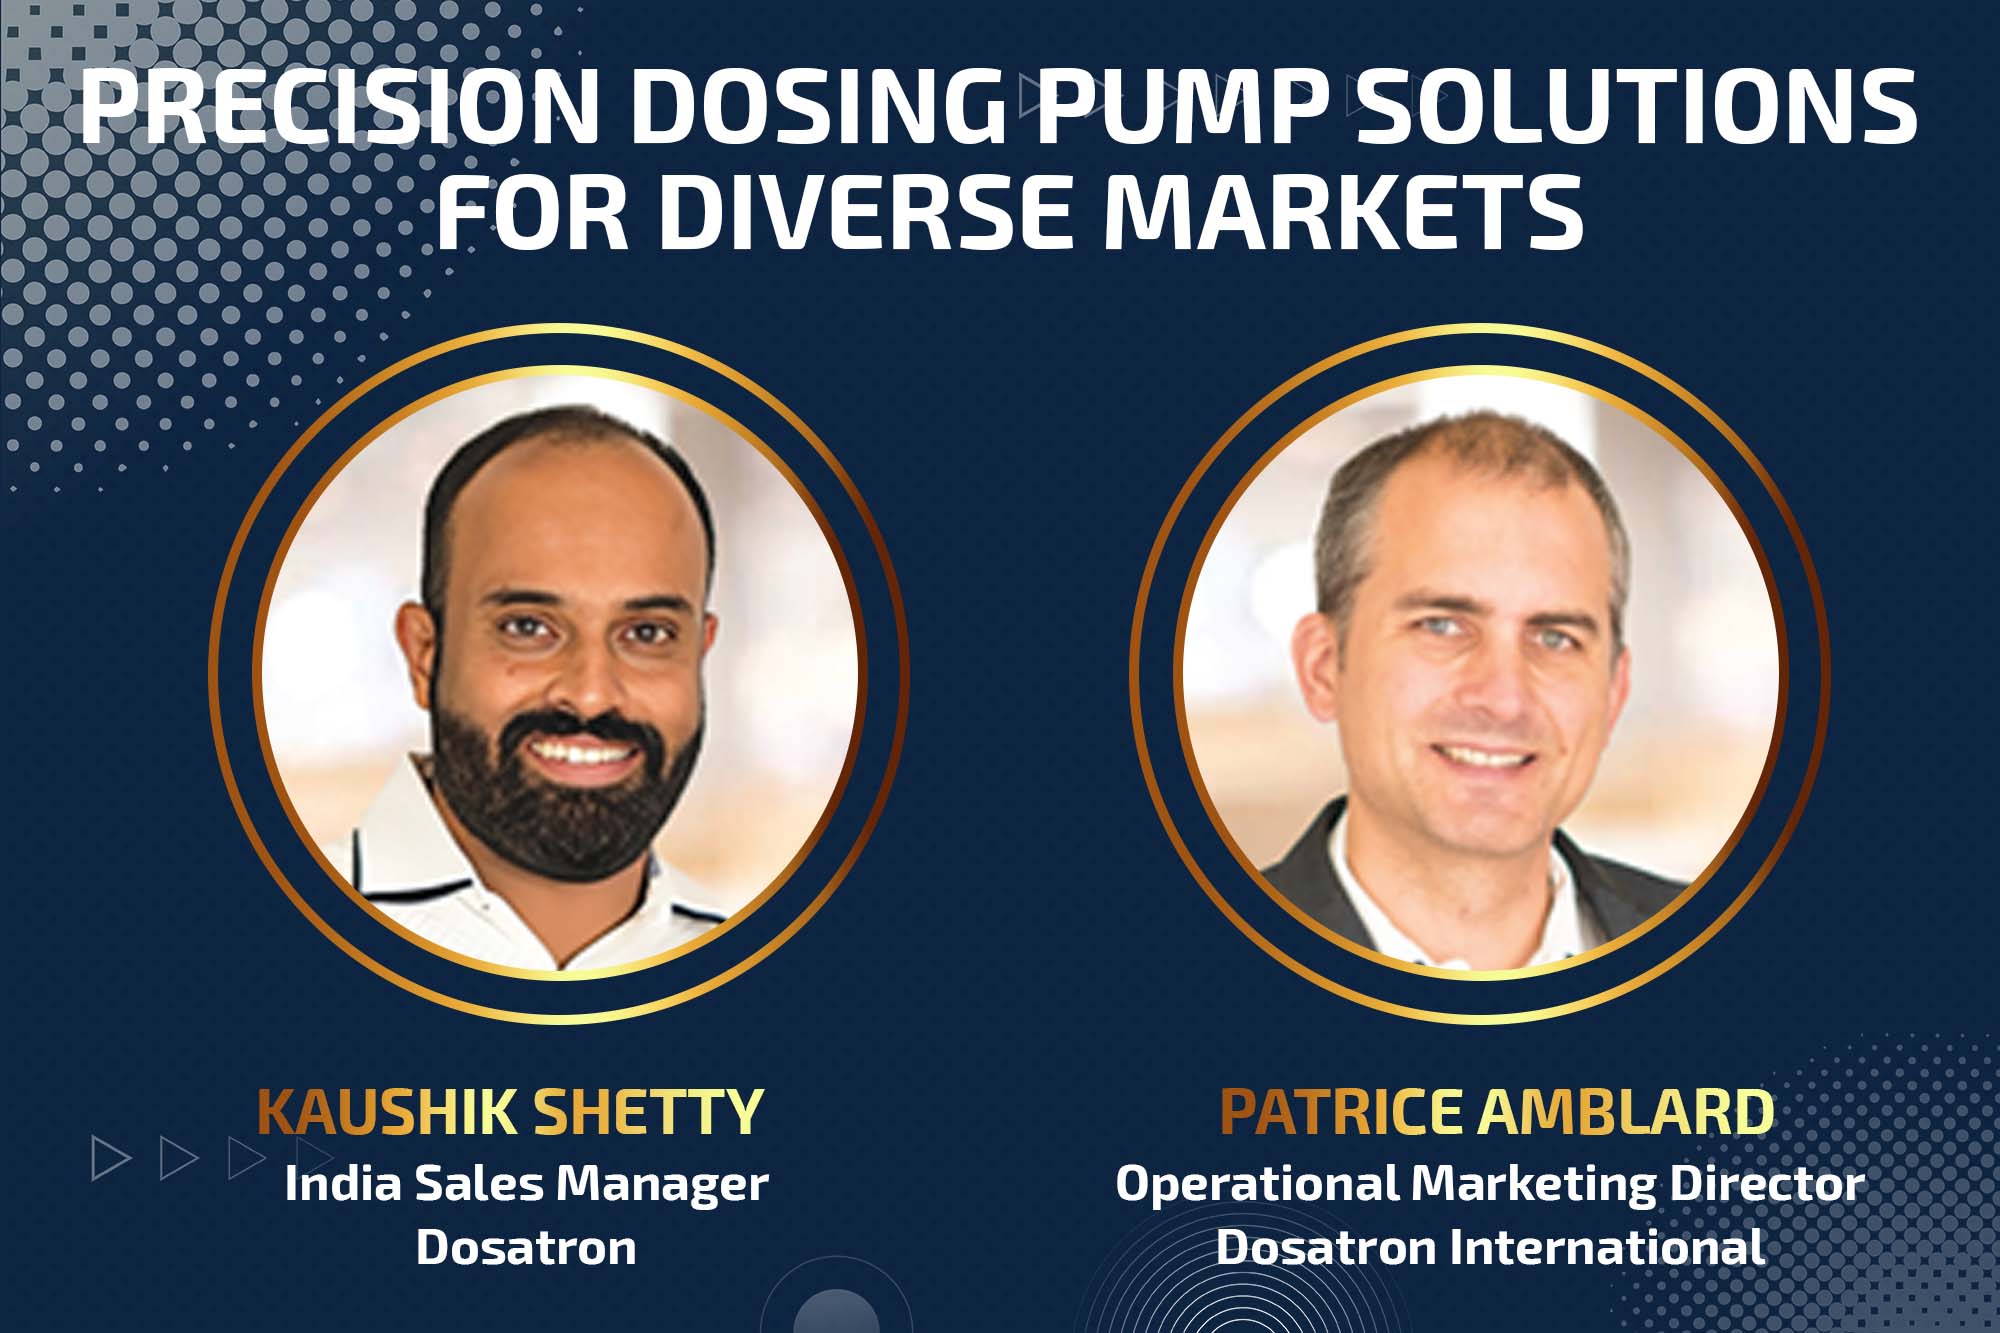 Precision dosing pump solutions for diverse markets